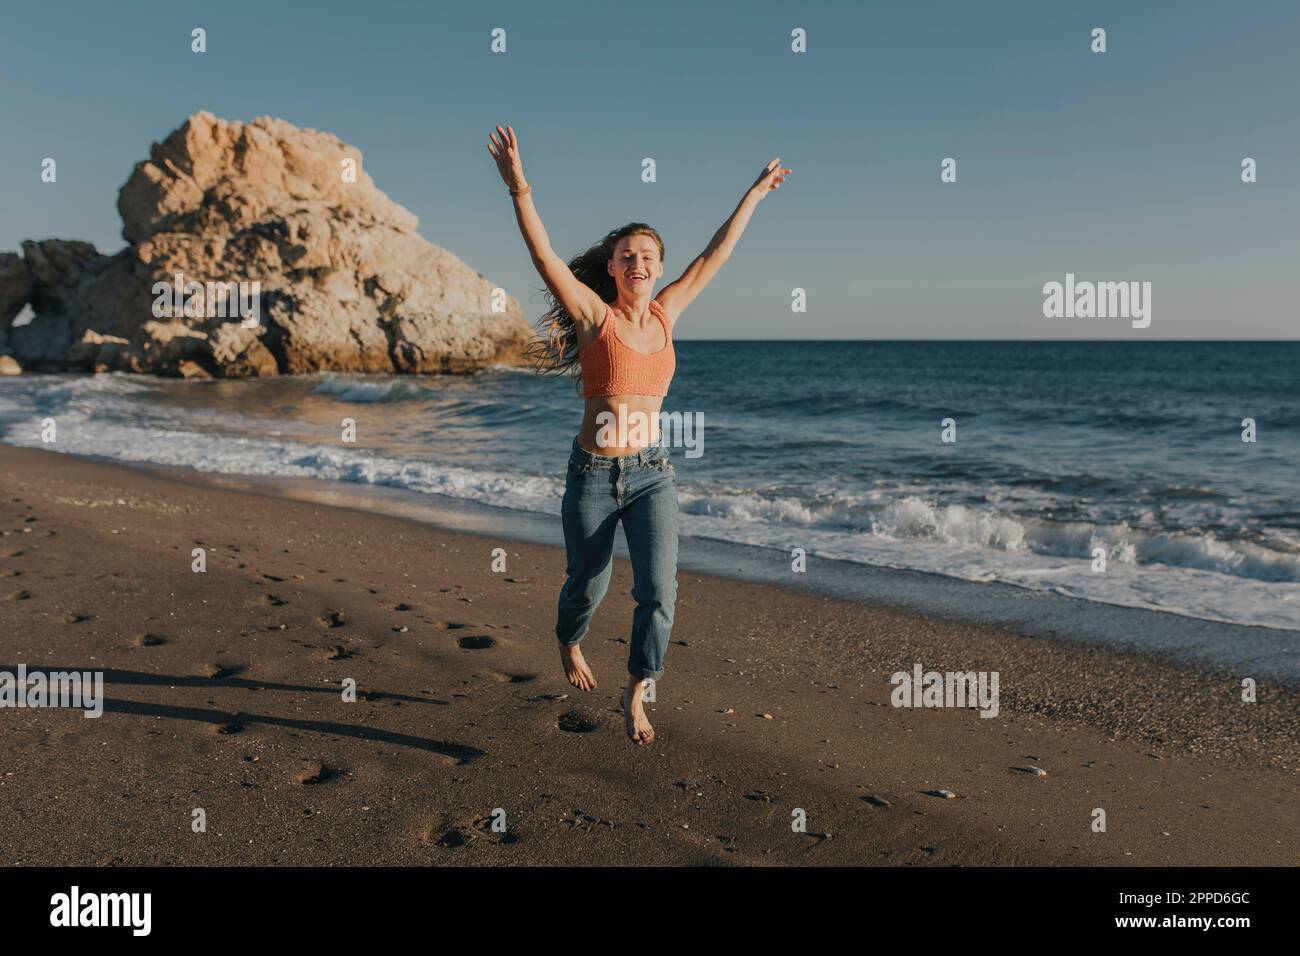 Cheerful woman jumping and running at beach Stock Photo